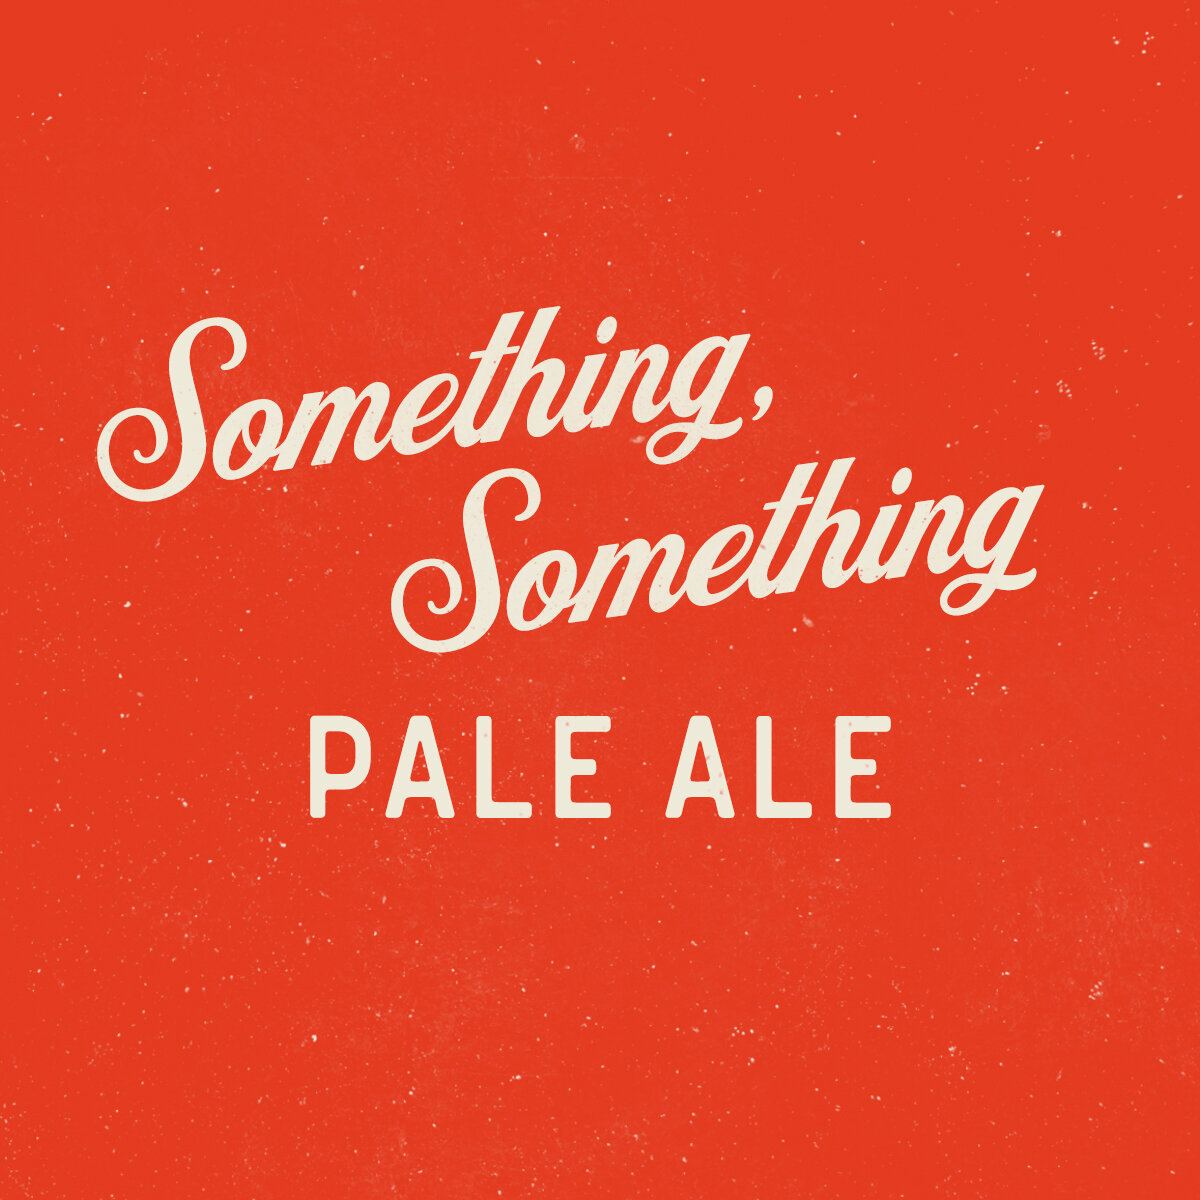 Something, Something Pale Ale